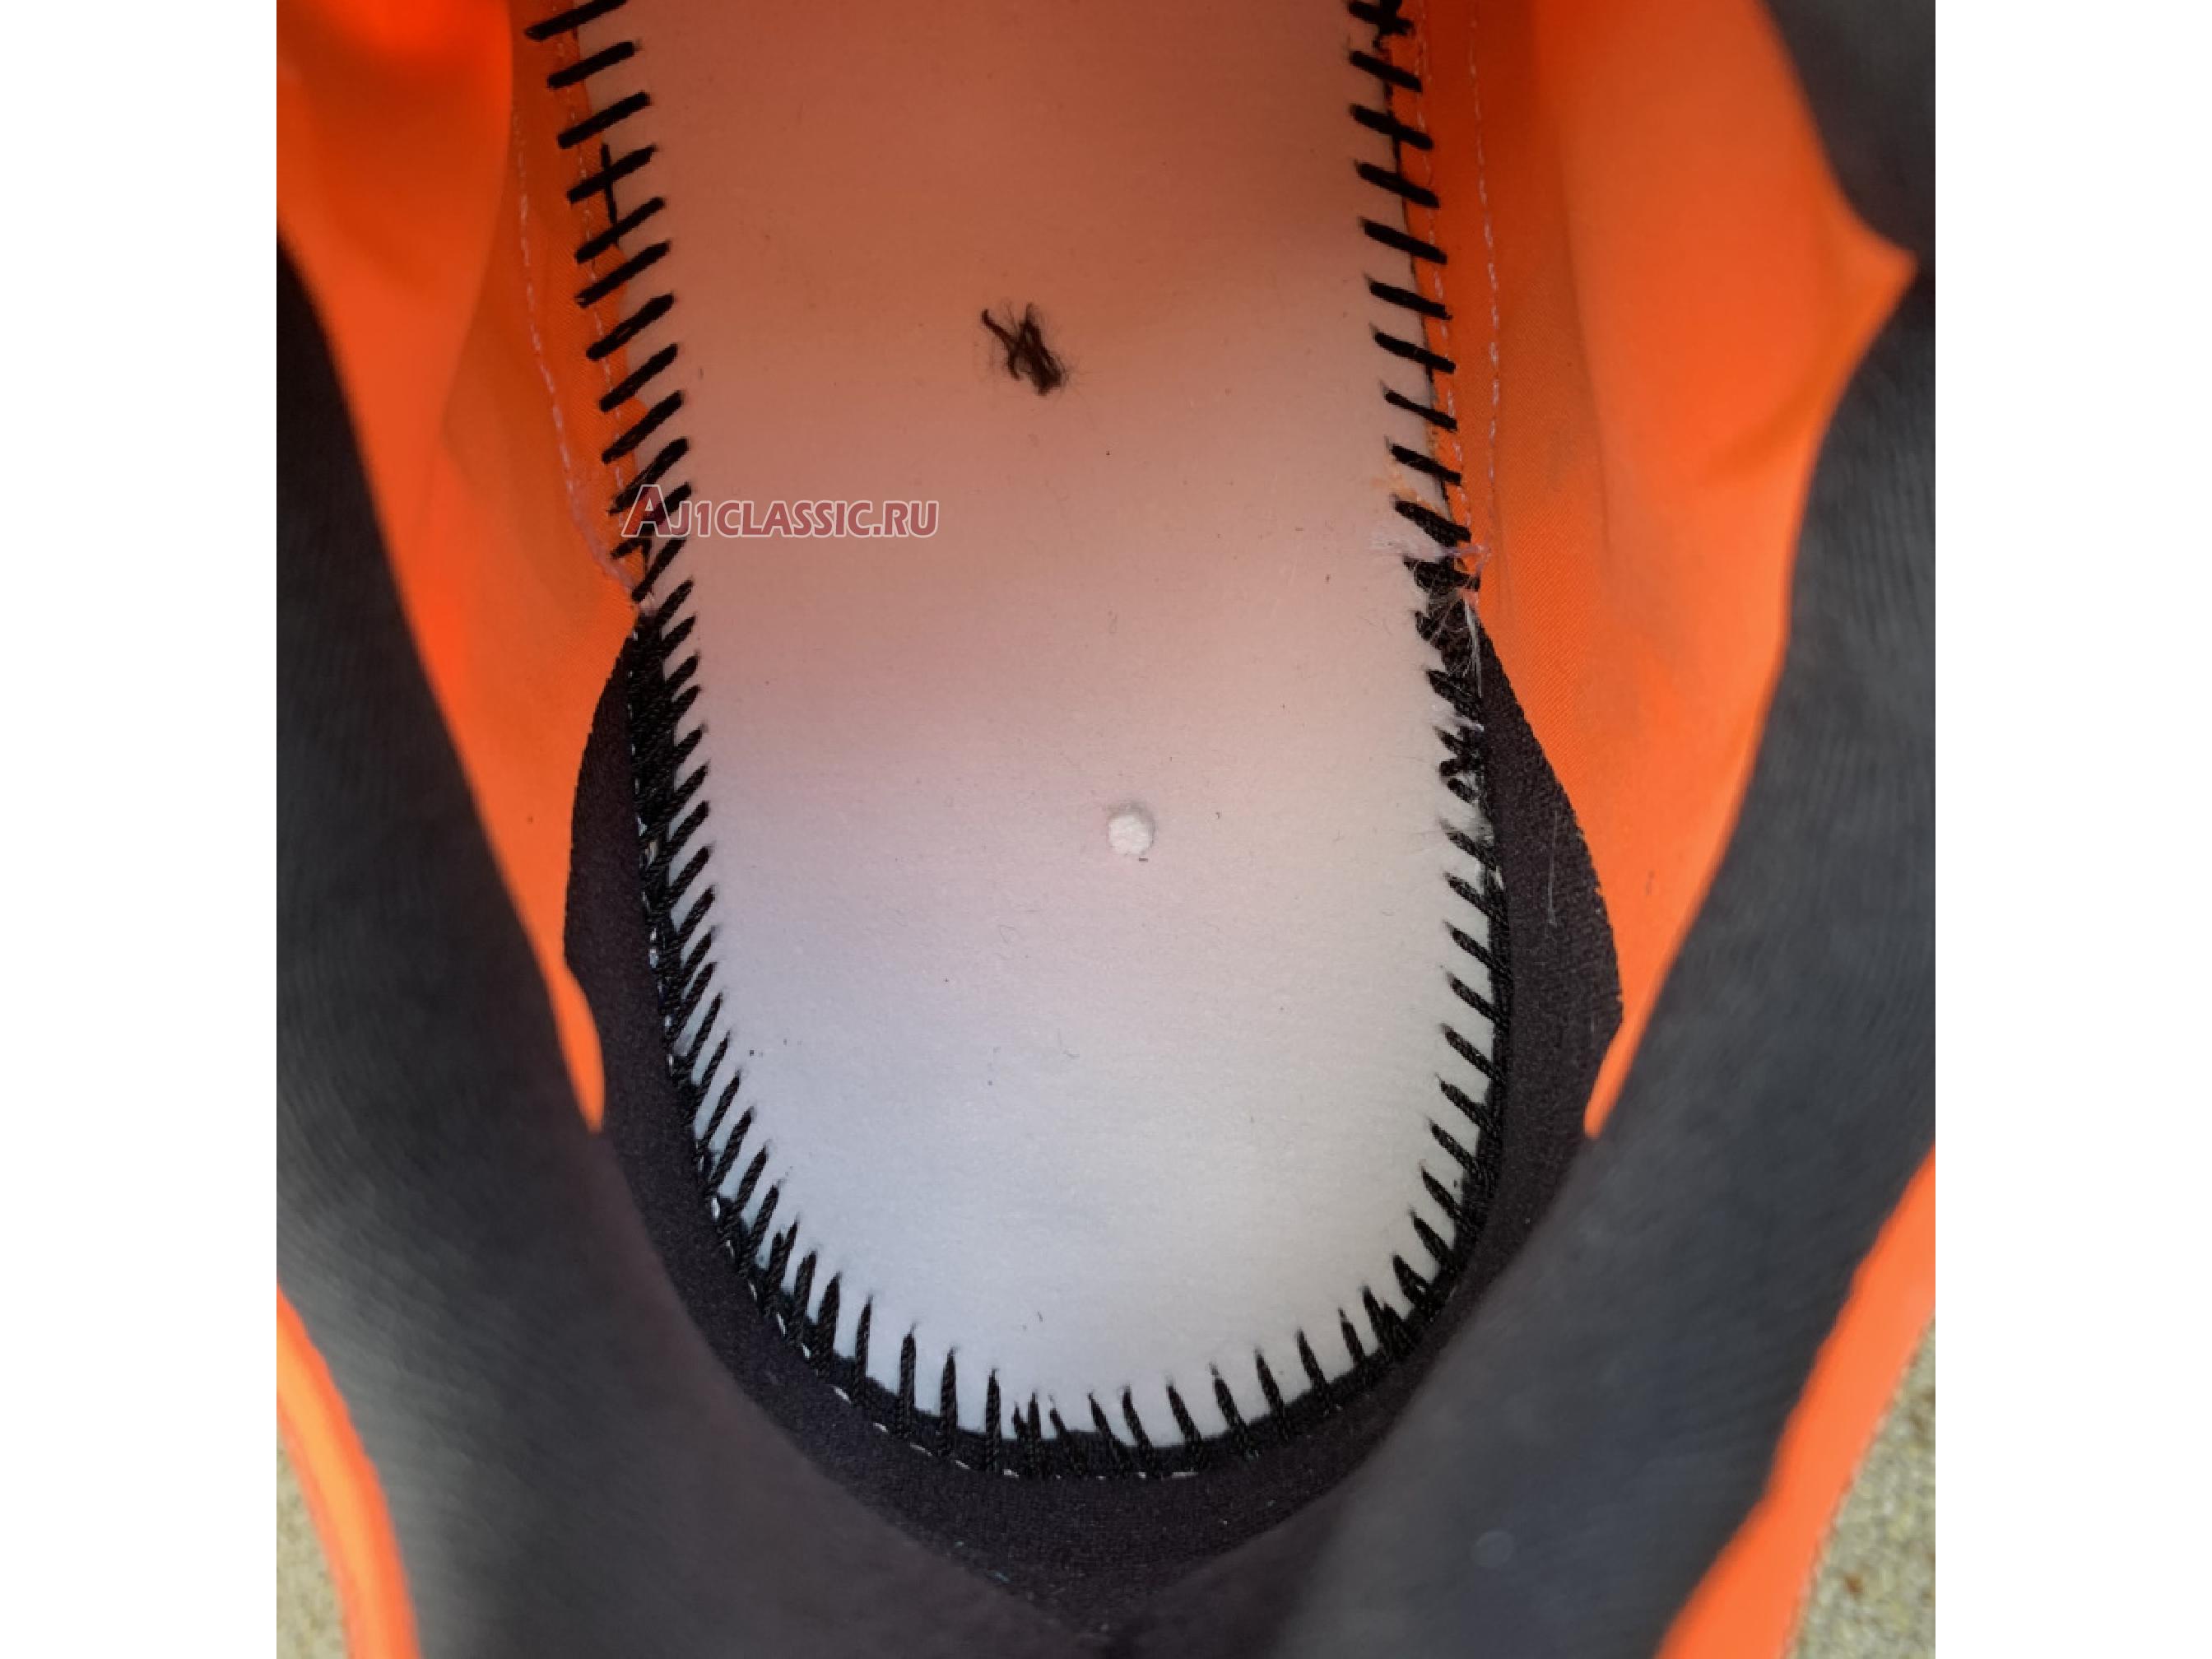 Adidas Yeezy Boost 700 MNVN "Orange" FV3258